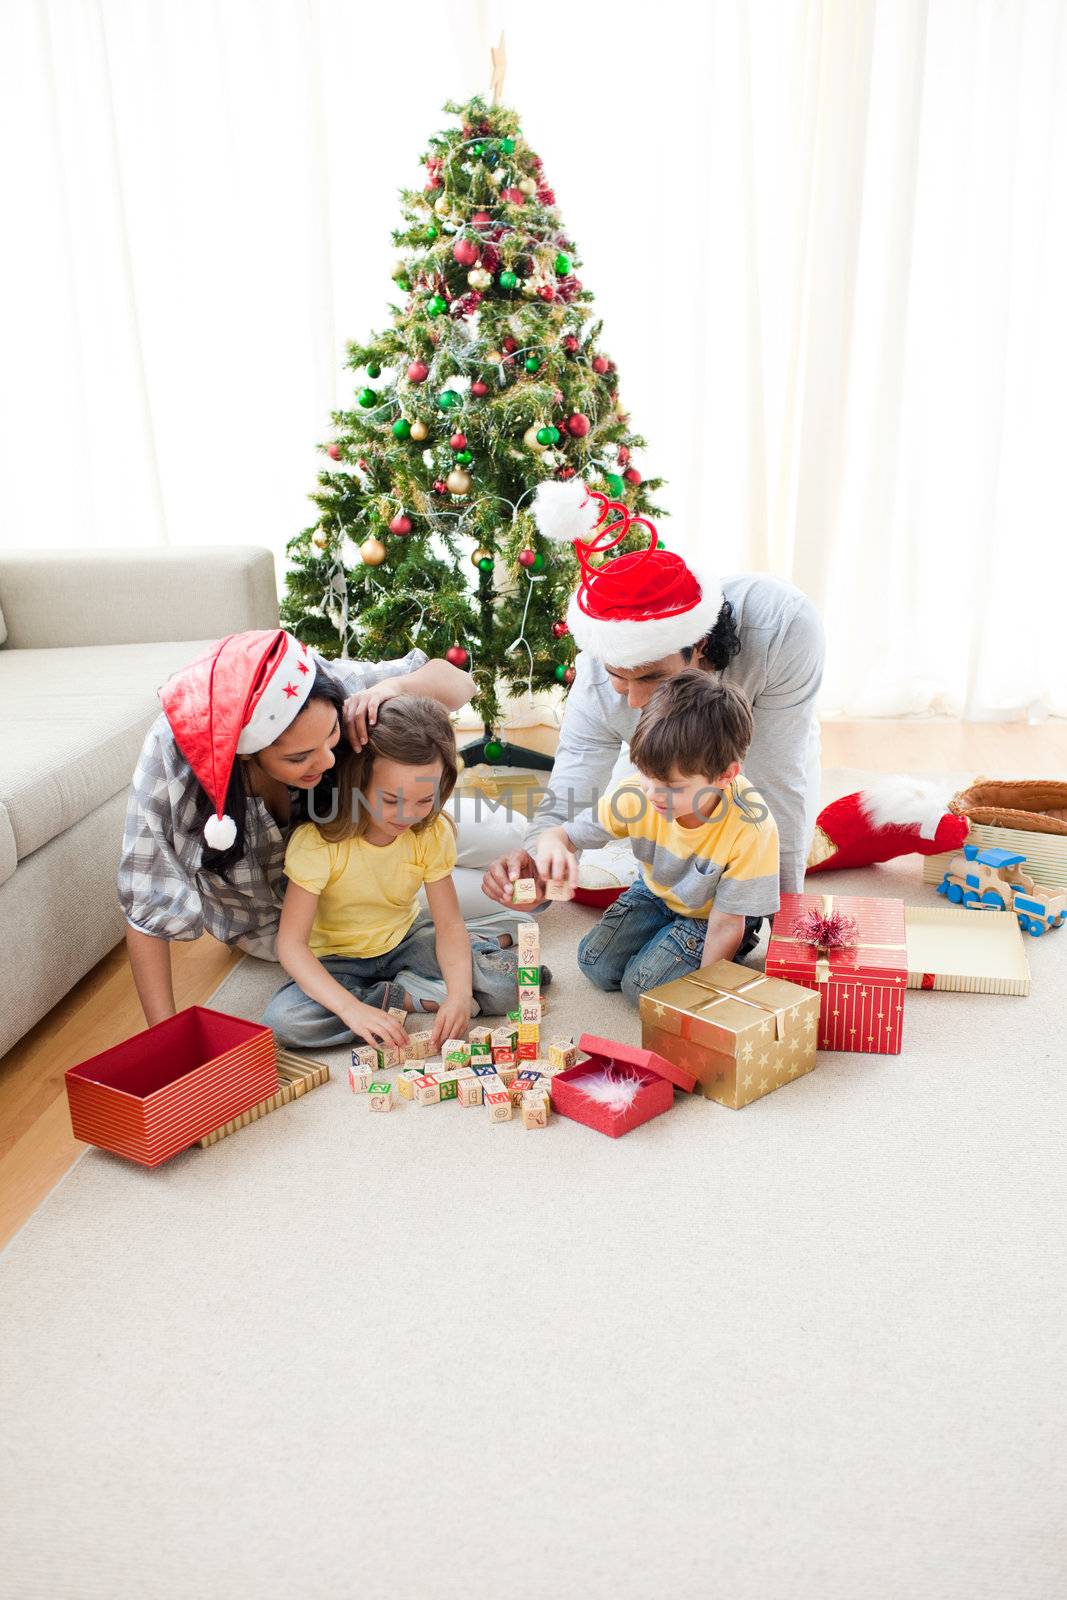 Family decorating a Christmas tree by Wavebreakmedia